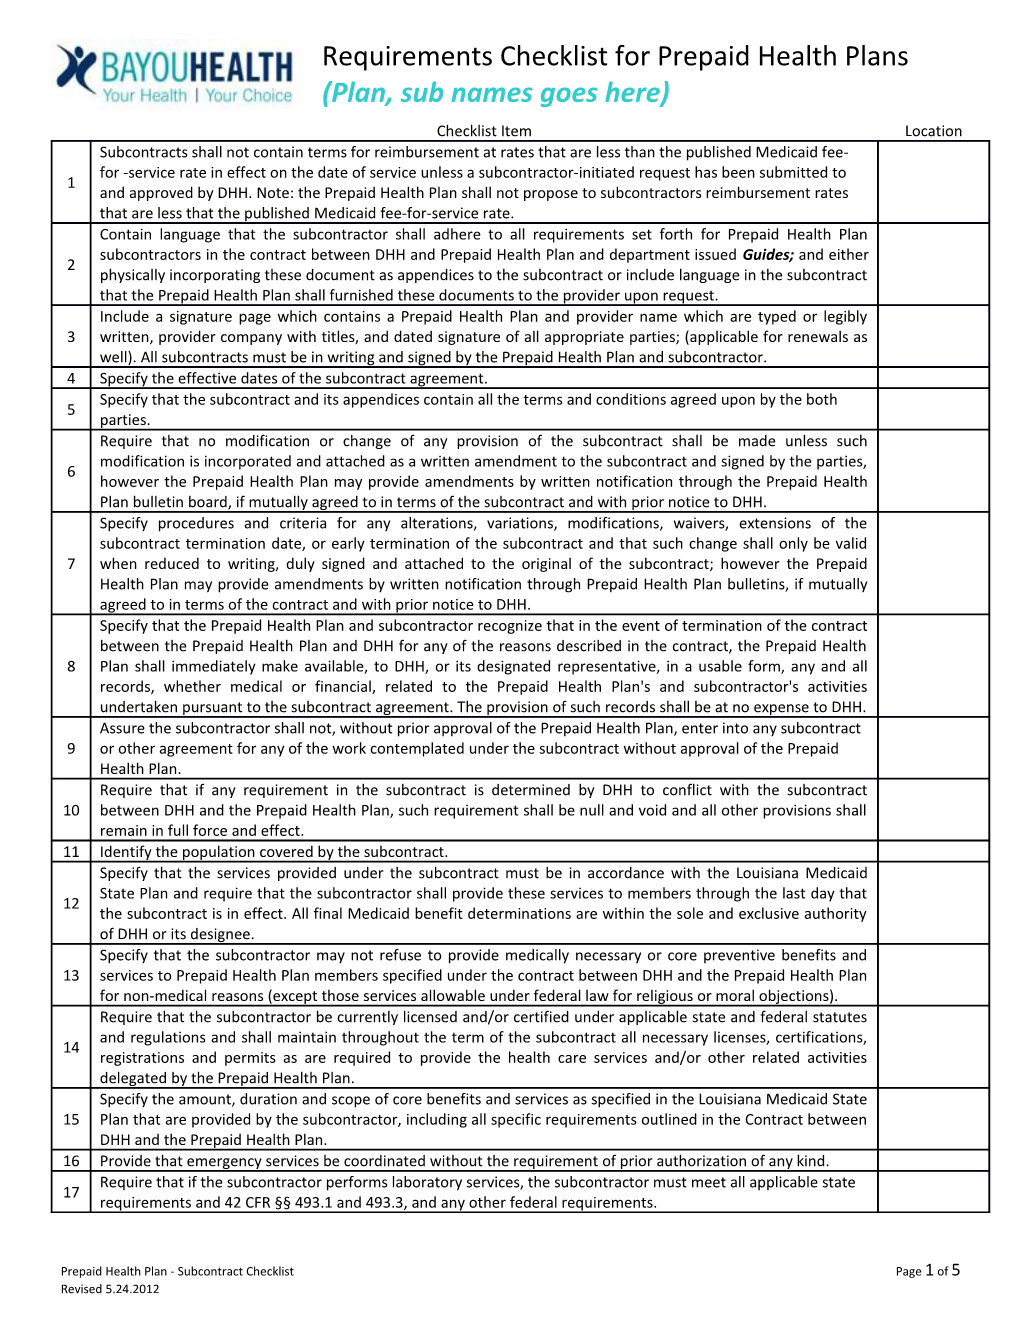 Prepaid Health Plan - Subcontract Checklistpage 1 of 5